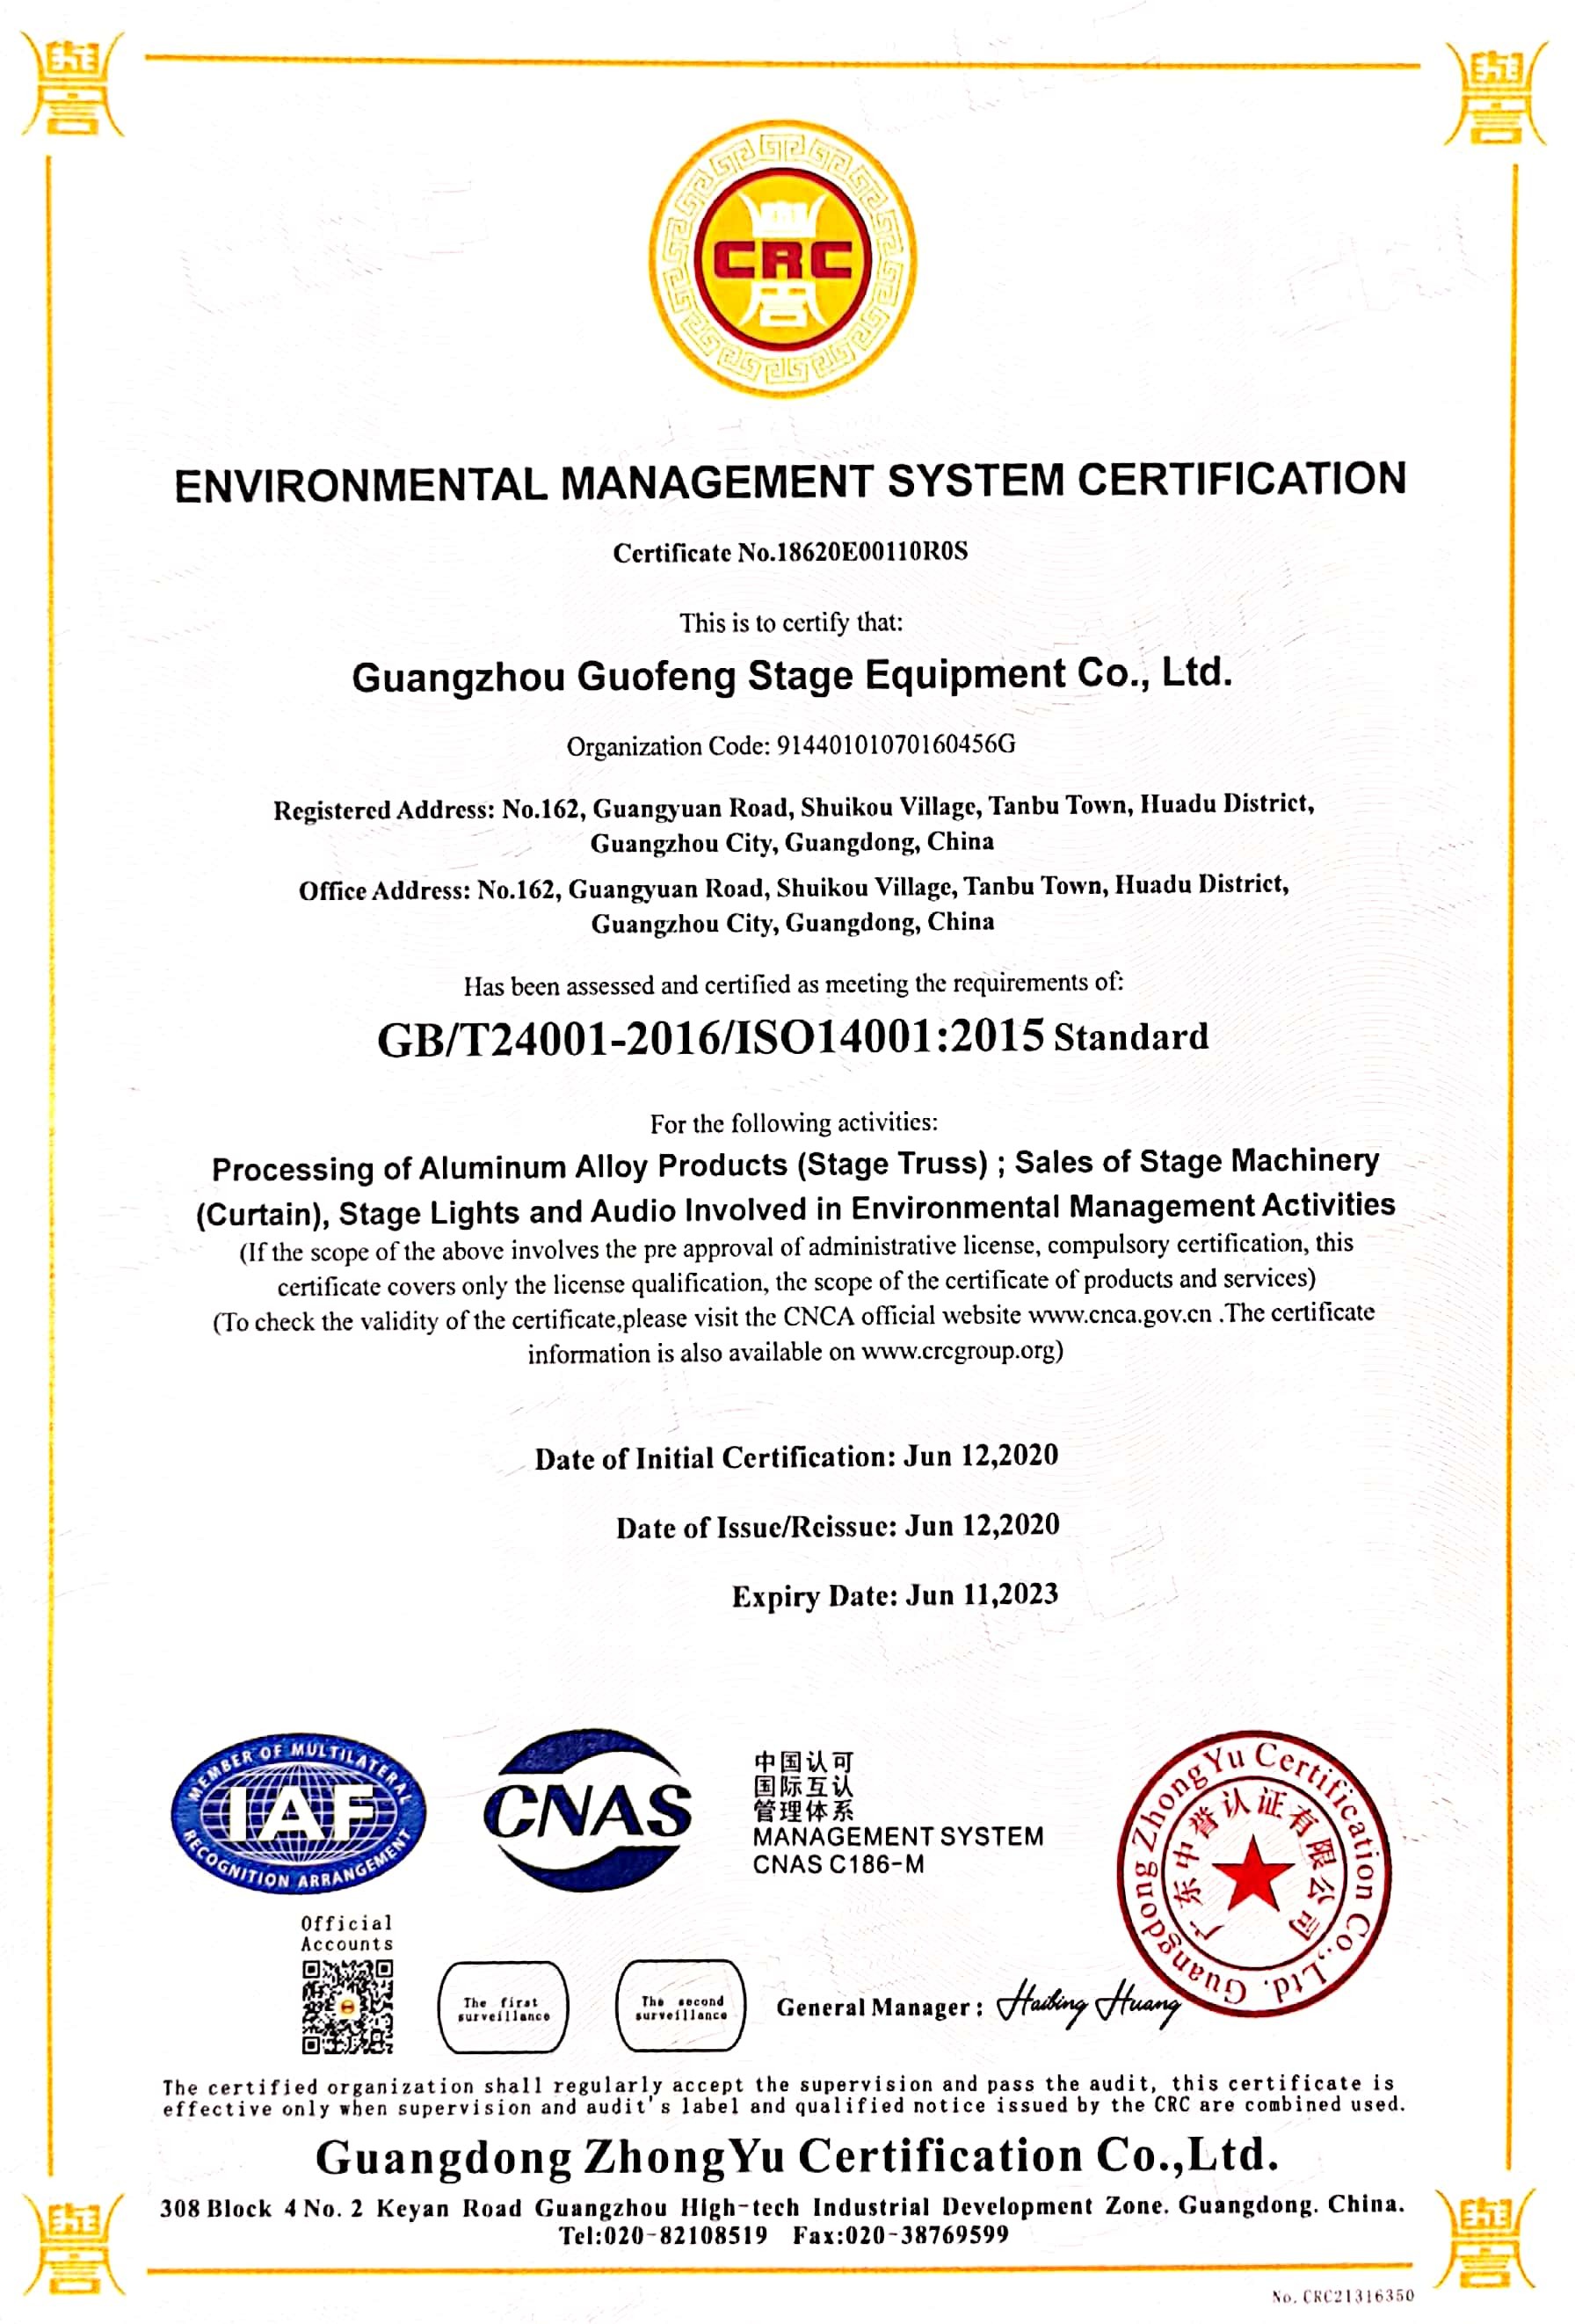 Guangzhou Guofeng Stage Equipment Co., Ltd. Certifications